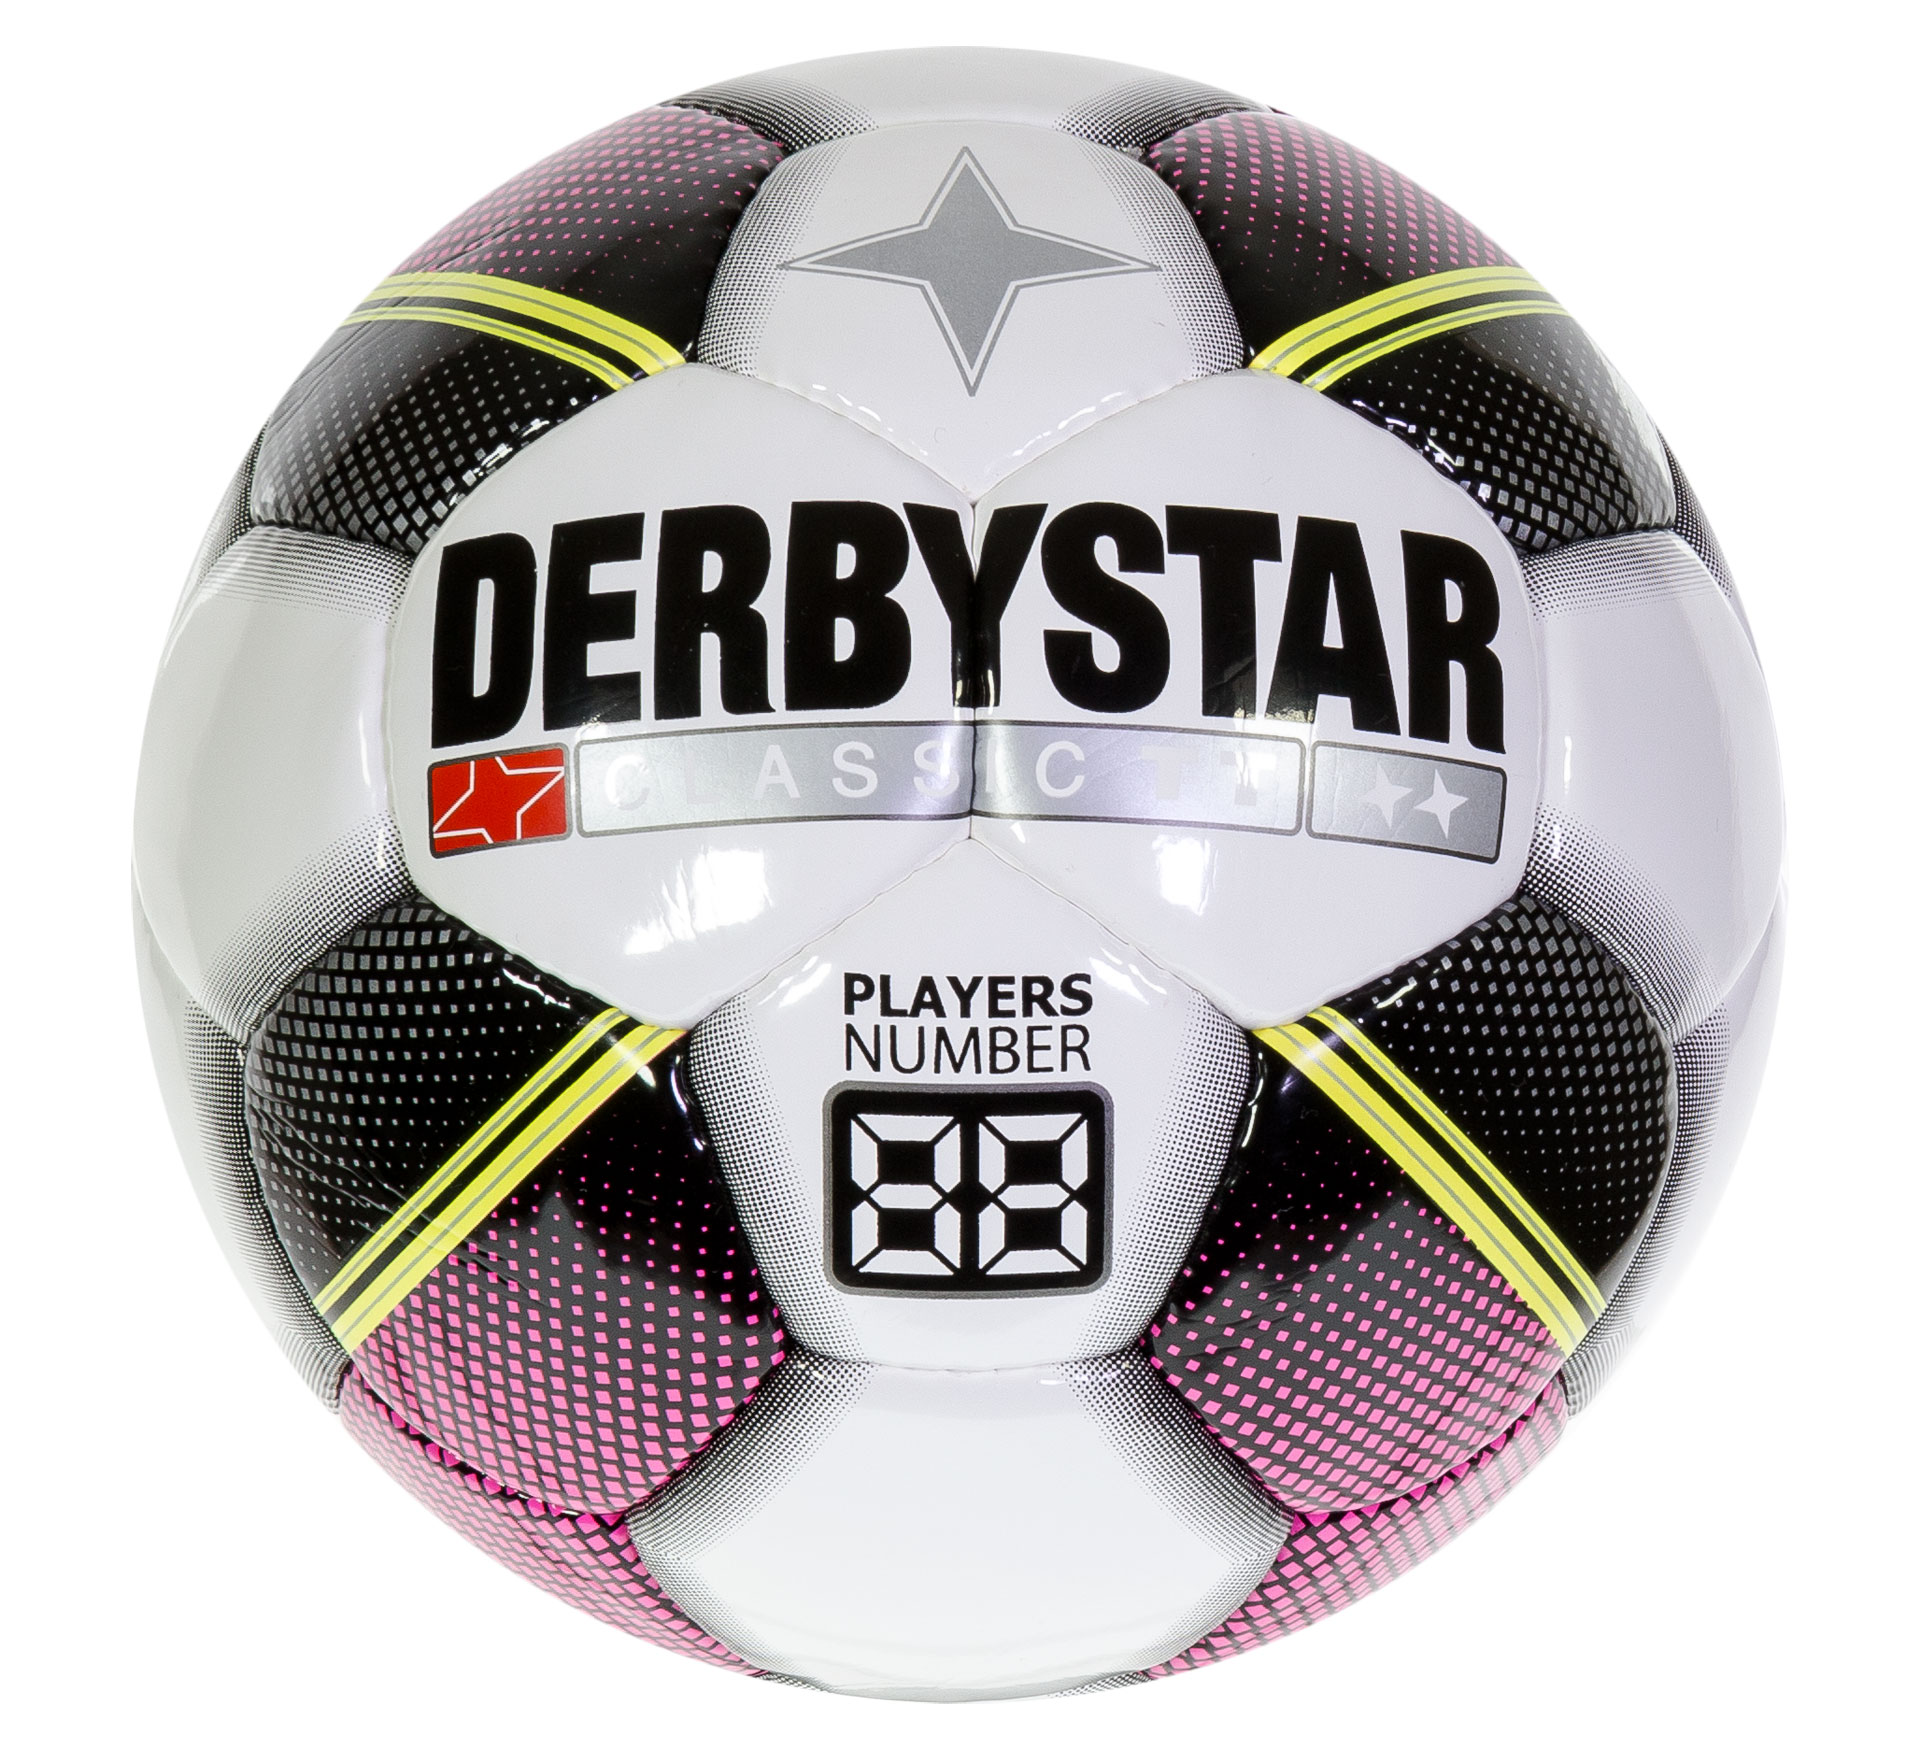 Le ballon de football Derbystar Classic TT W pour femmes